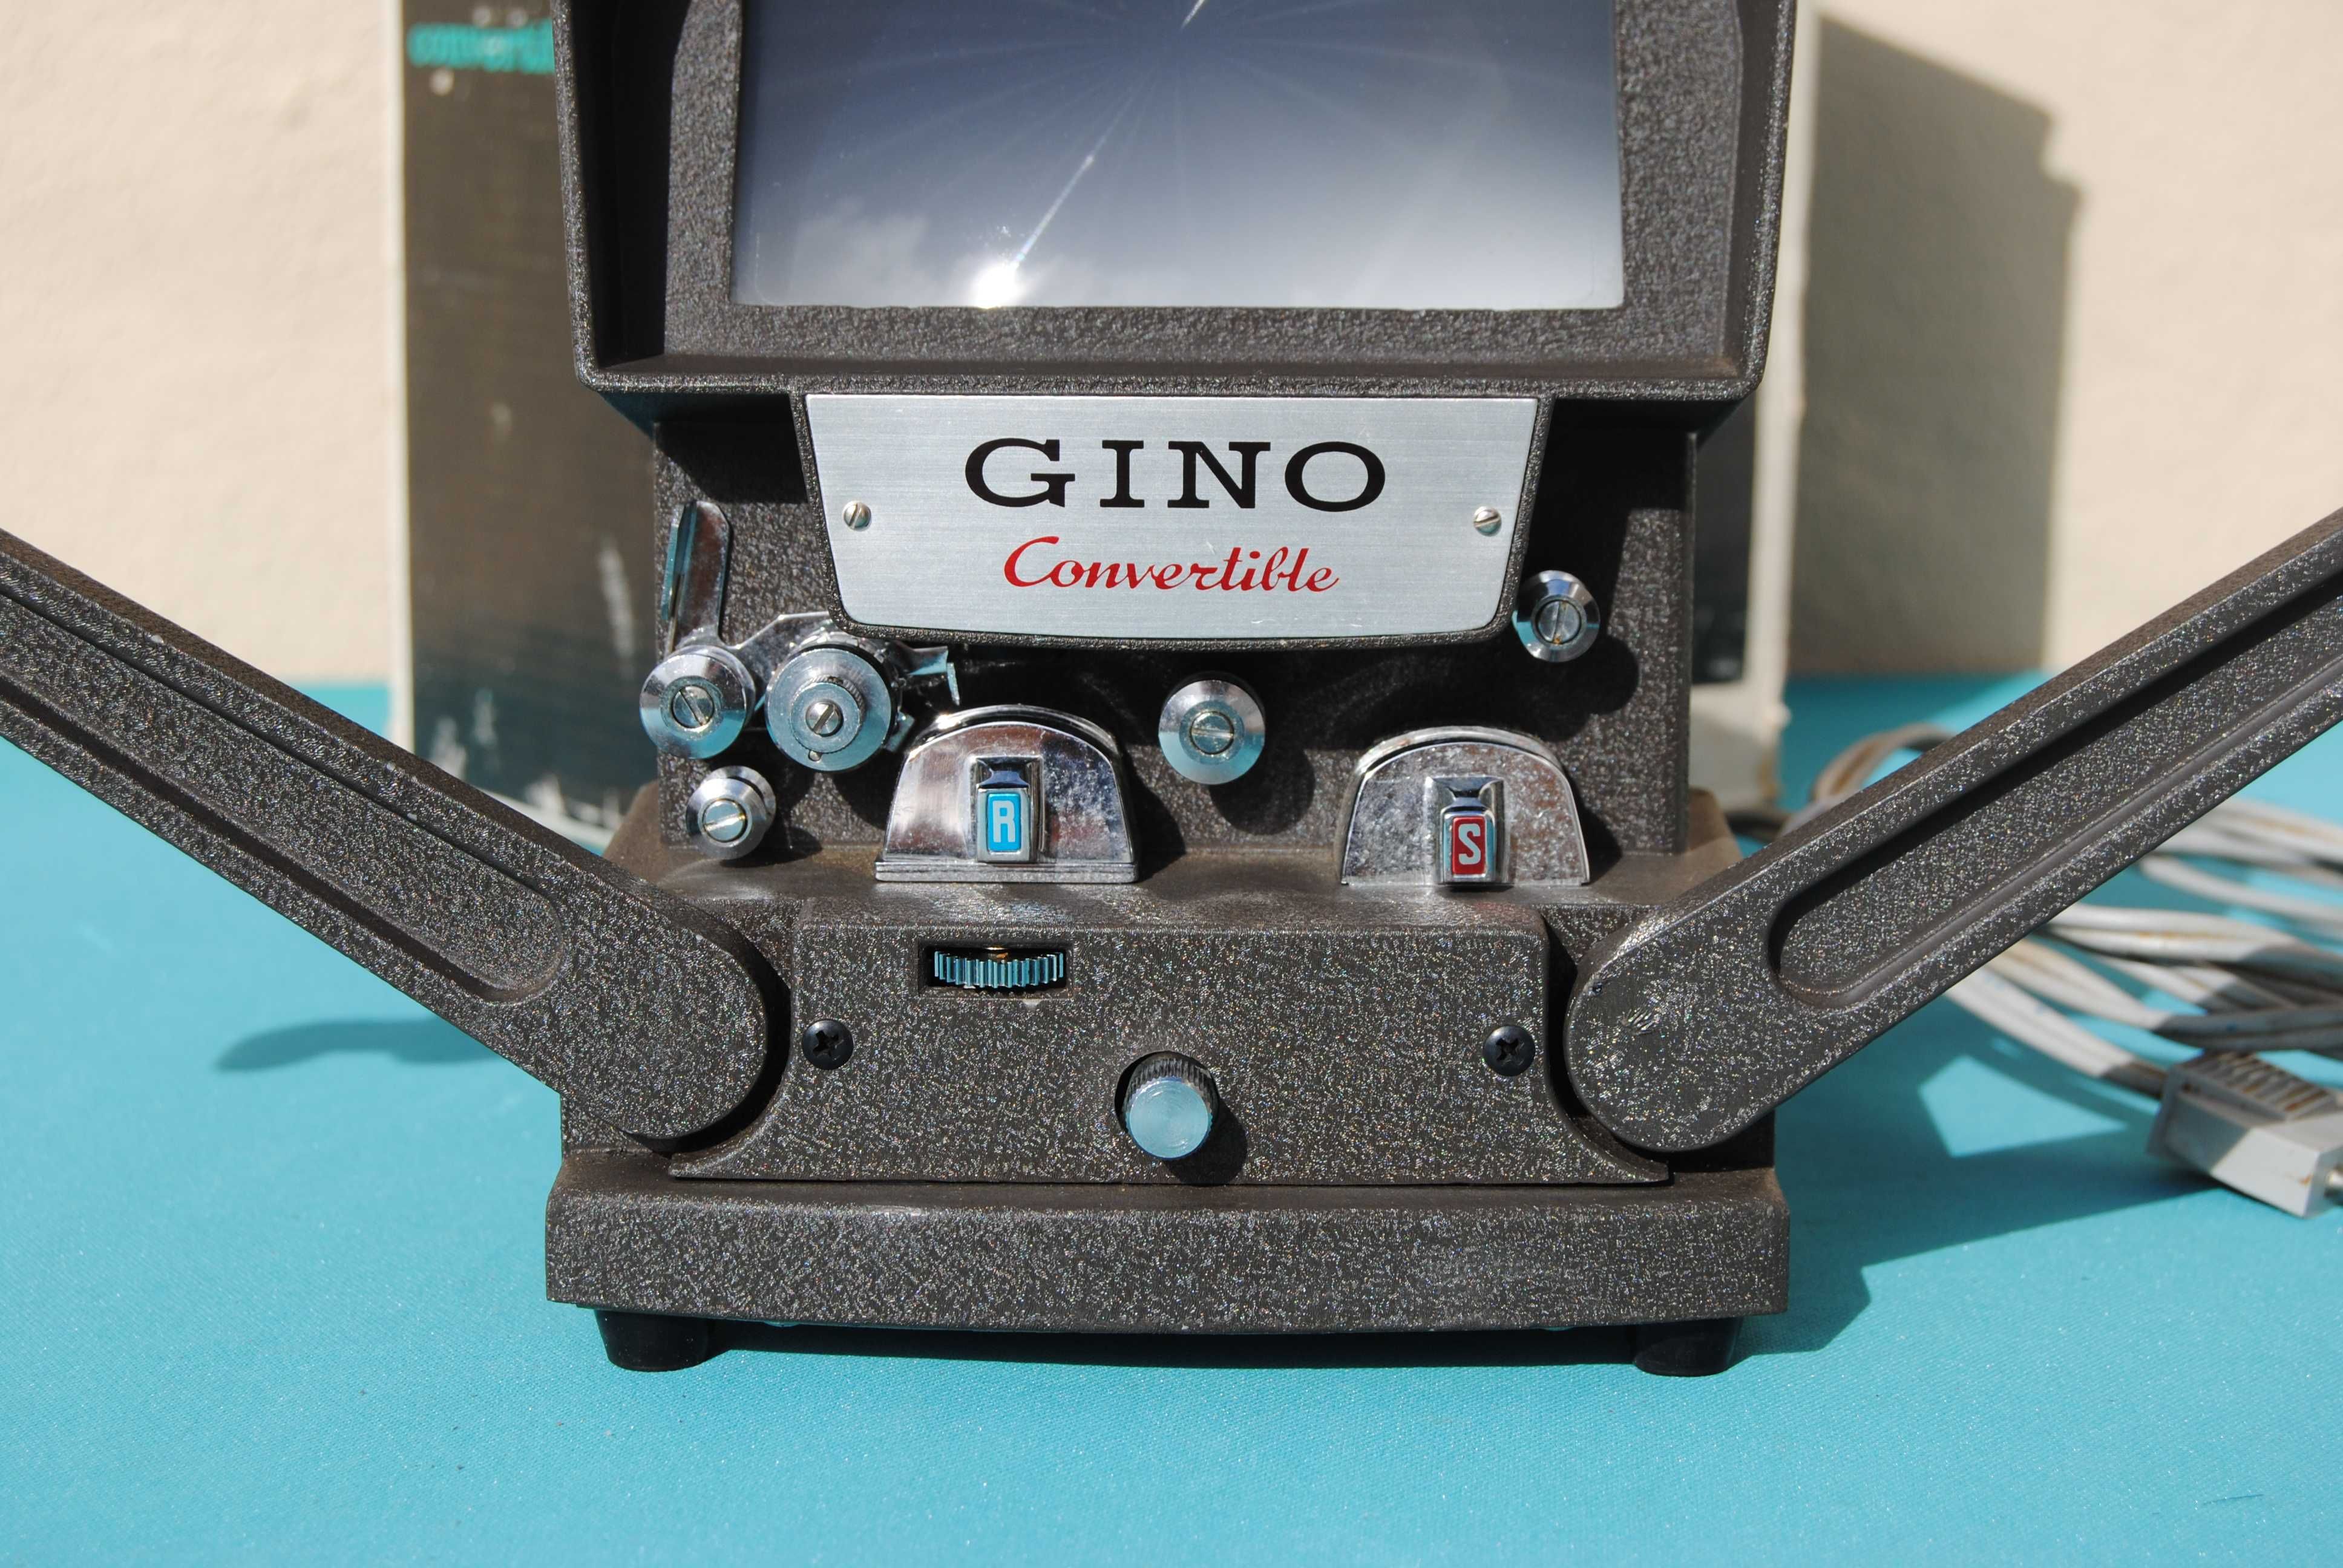 Gino convertible film editor "edits any 8mm film" na caixa - vintage